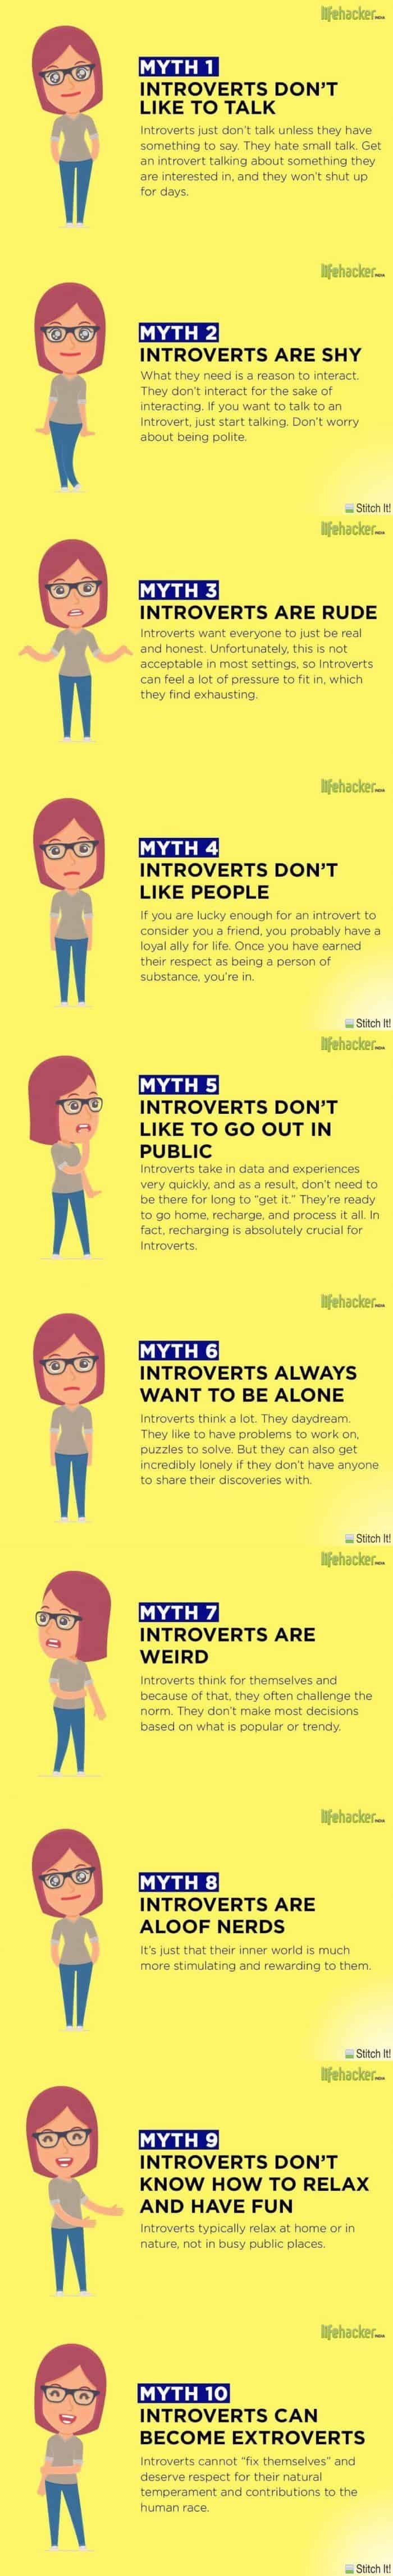 Introvert Myth's From Lifehacker